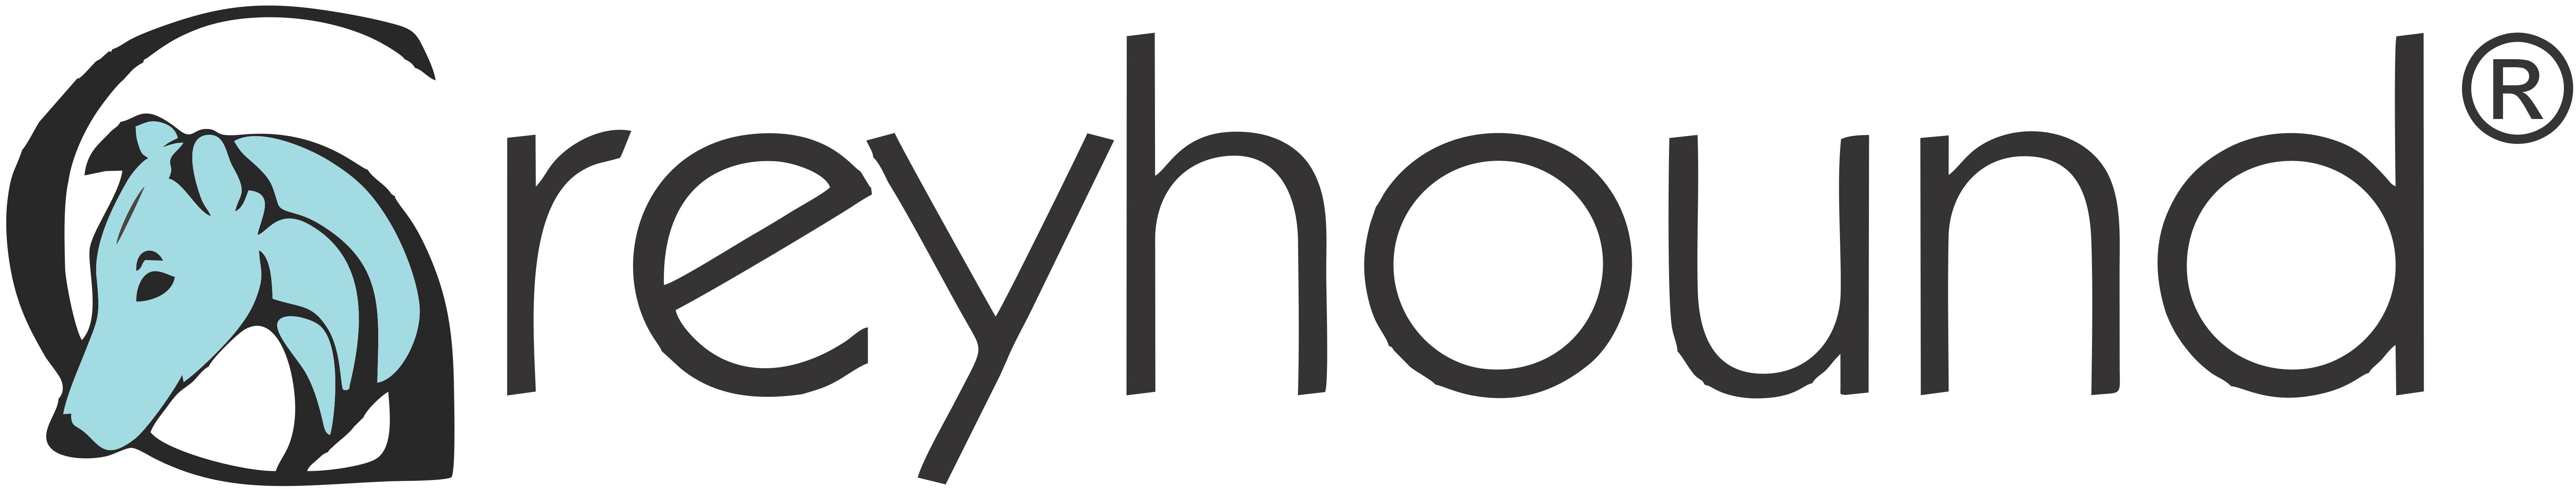 Greyhound_logo